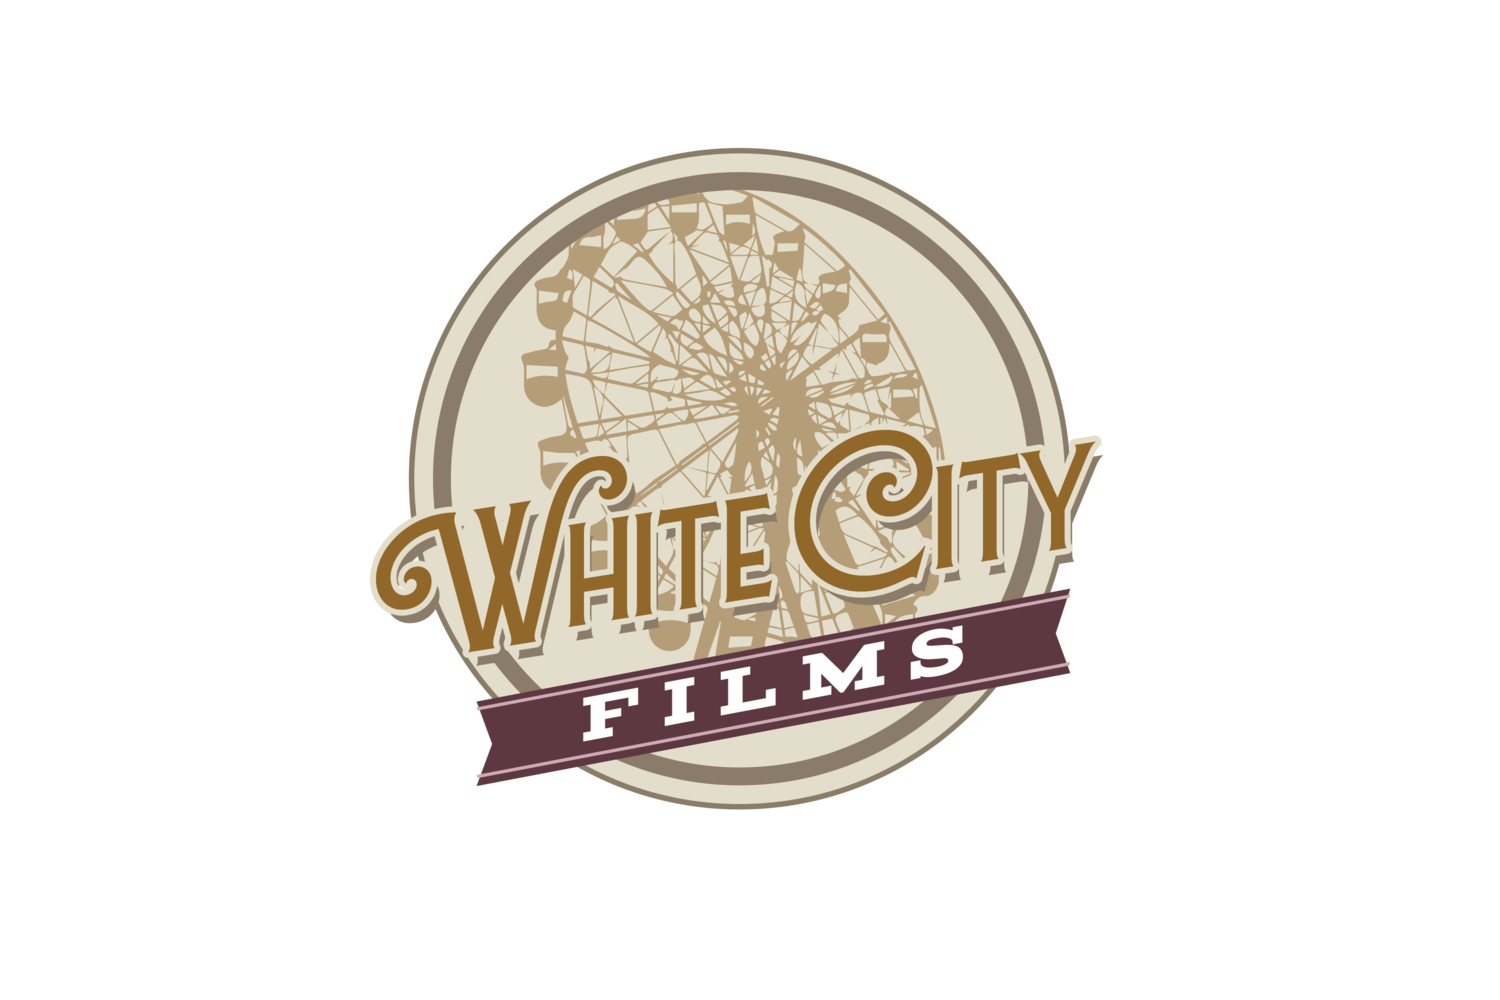 White City Films Chicago